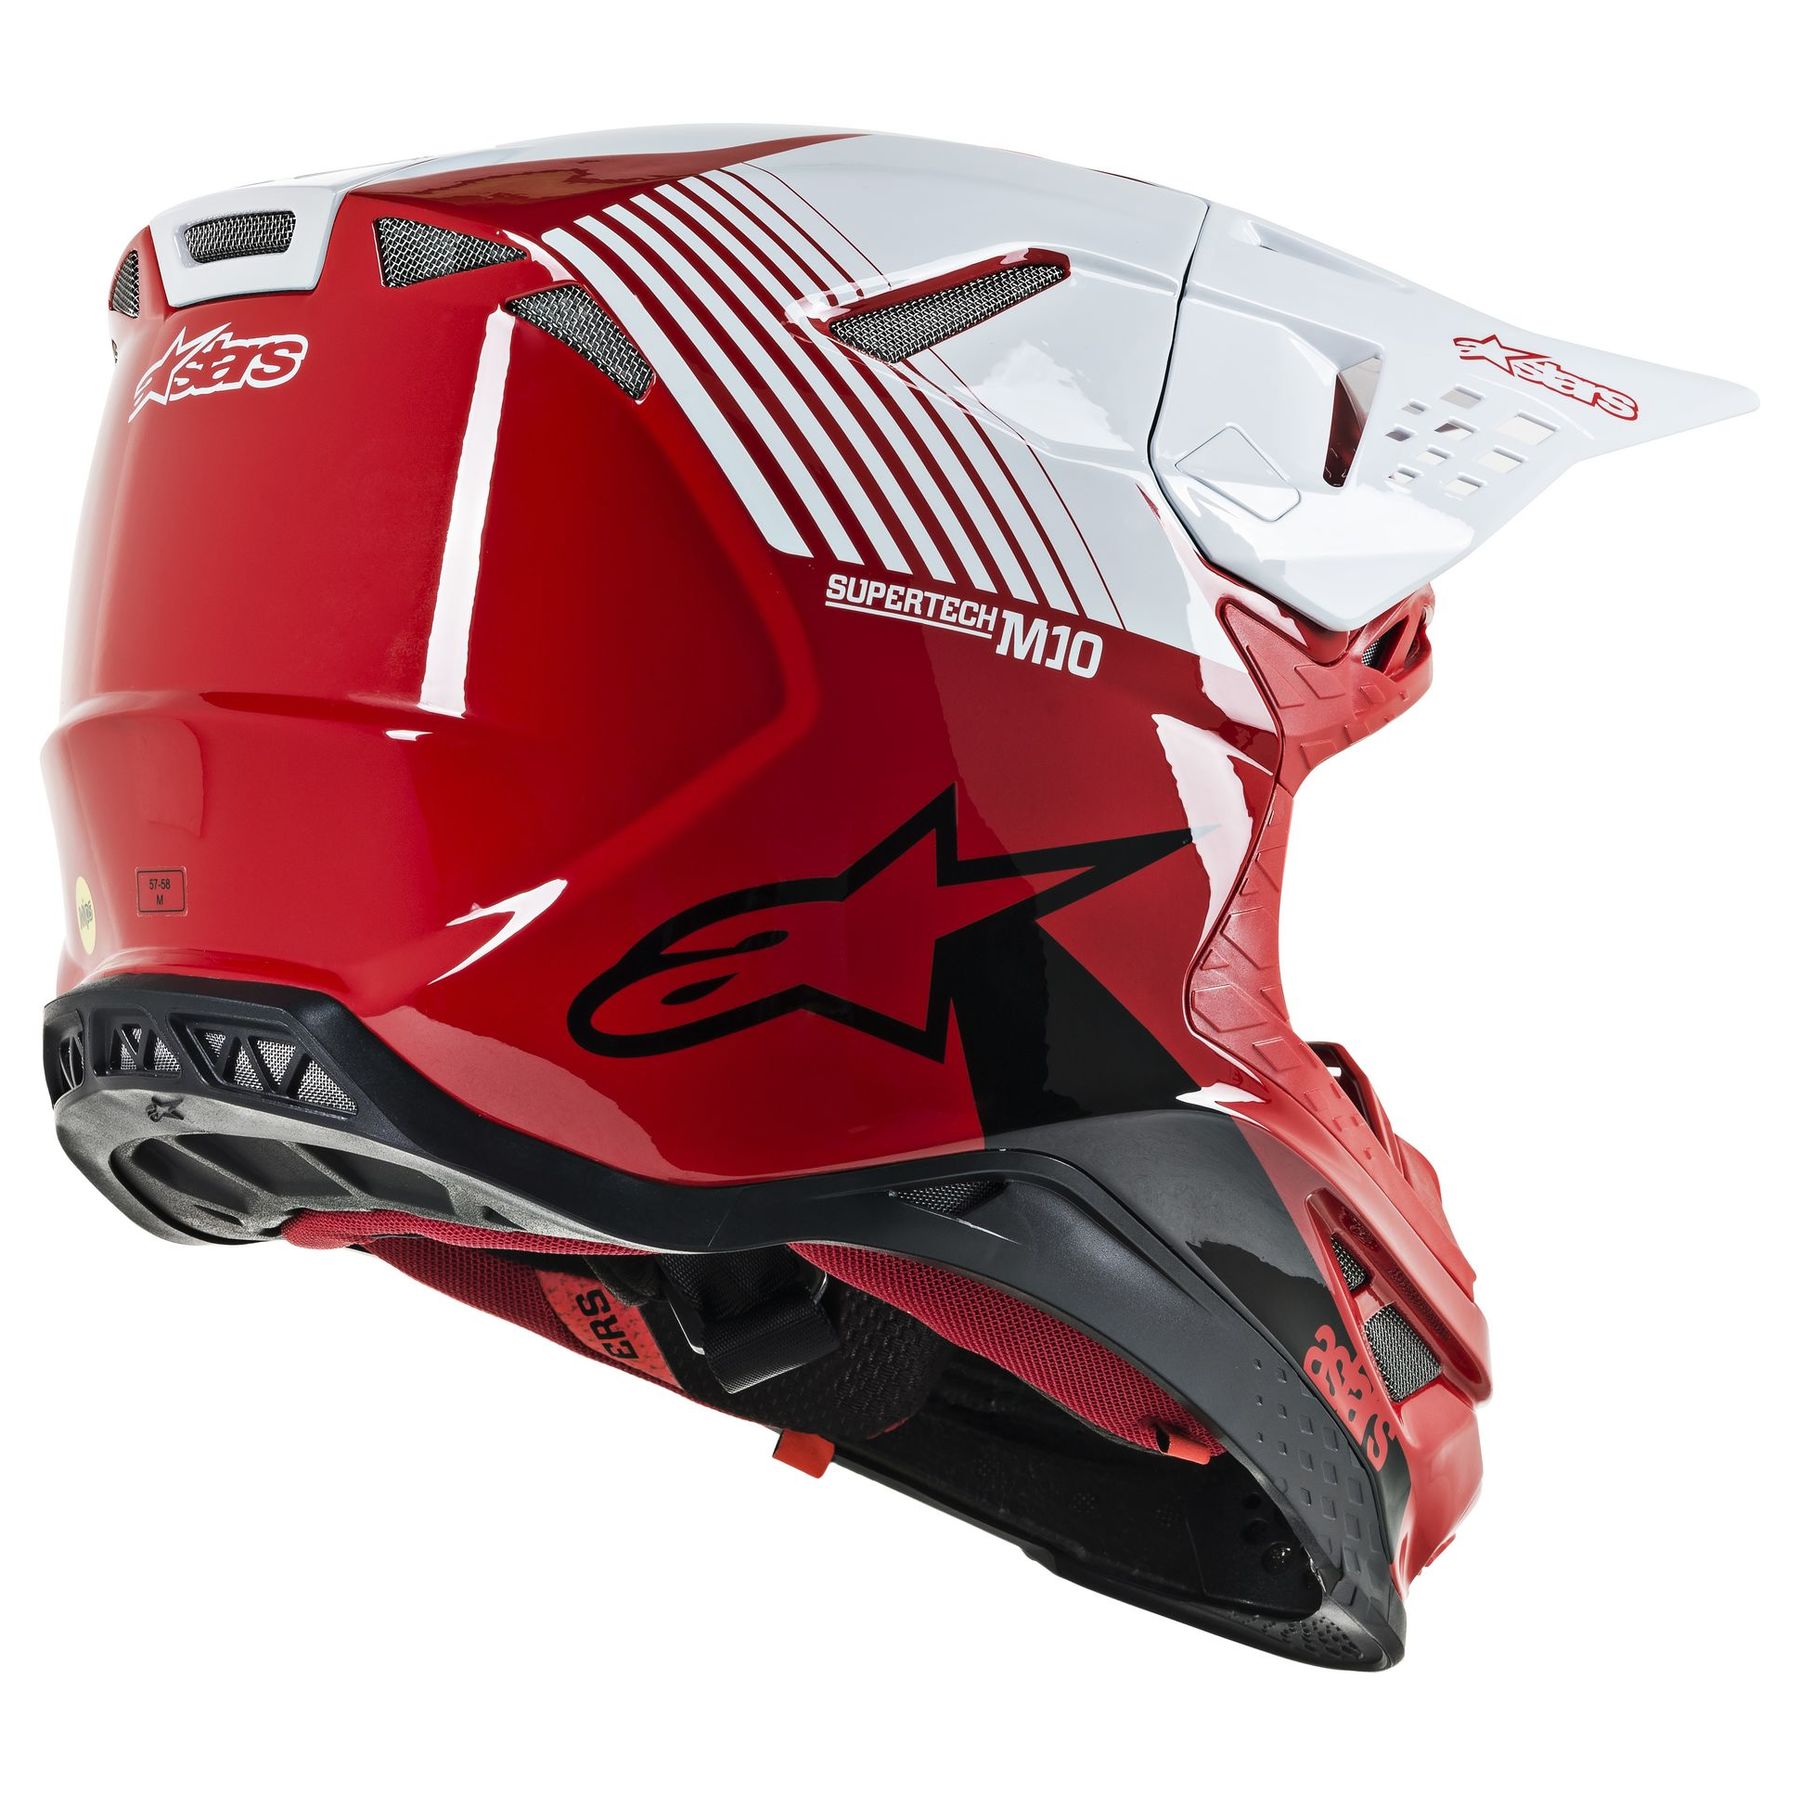 Alpinestars Supertech S-M10 Carbon Dyno Helmet